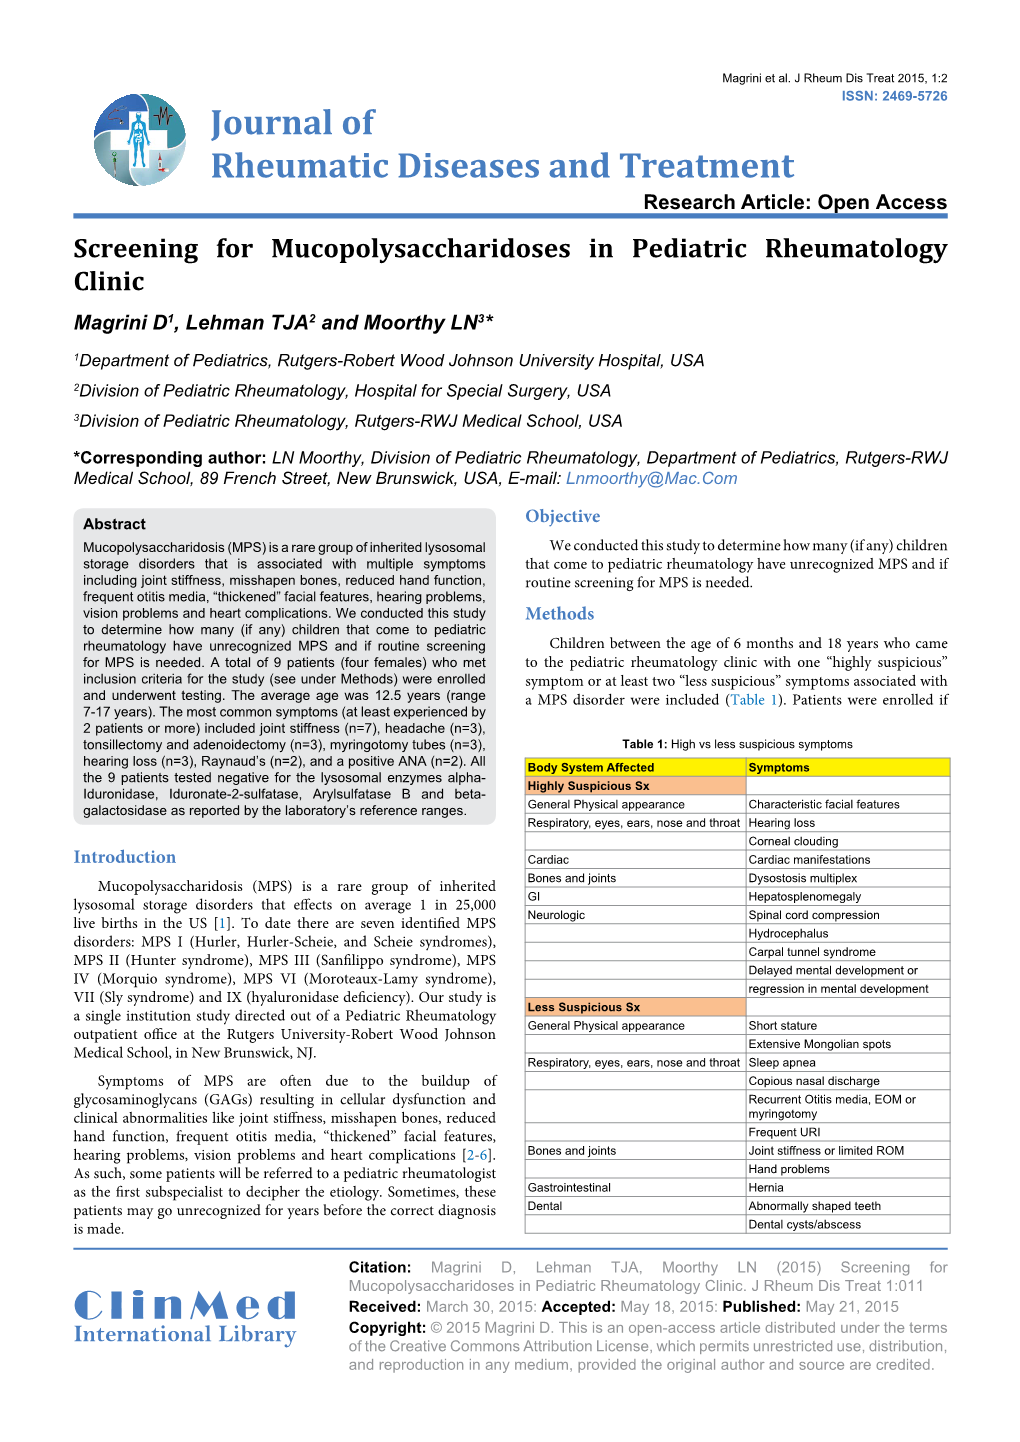 Screening for Mucopolysaccharidoses in Pediatric Rheumatology Clinic Magrini D1, Lehman TJA2 and Moorthy LN3*